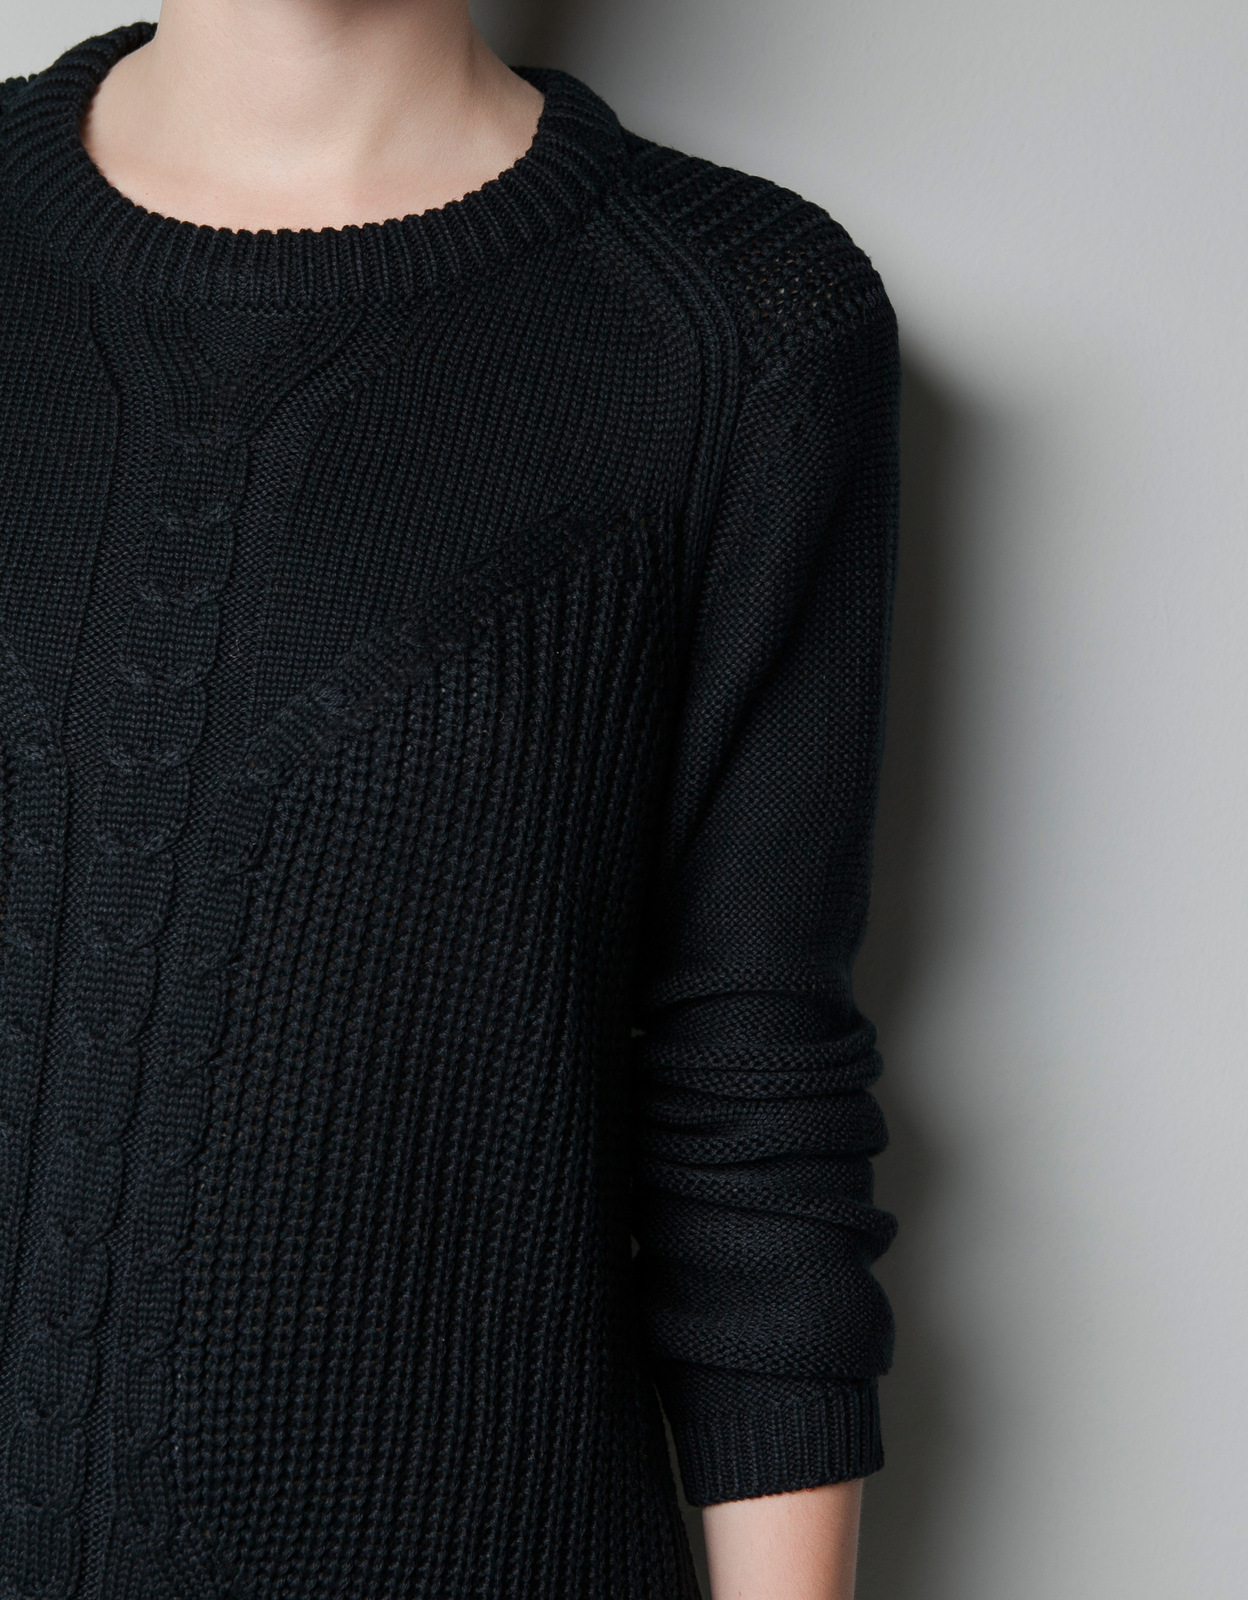 Zara fekete kötött pulóver 2012.10.21 fotója